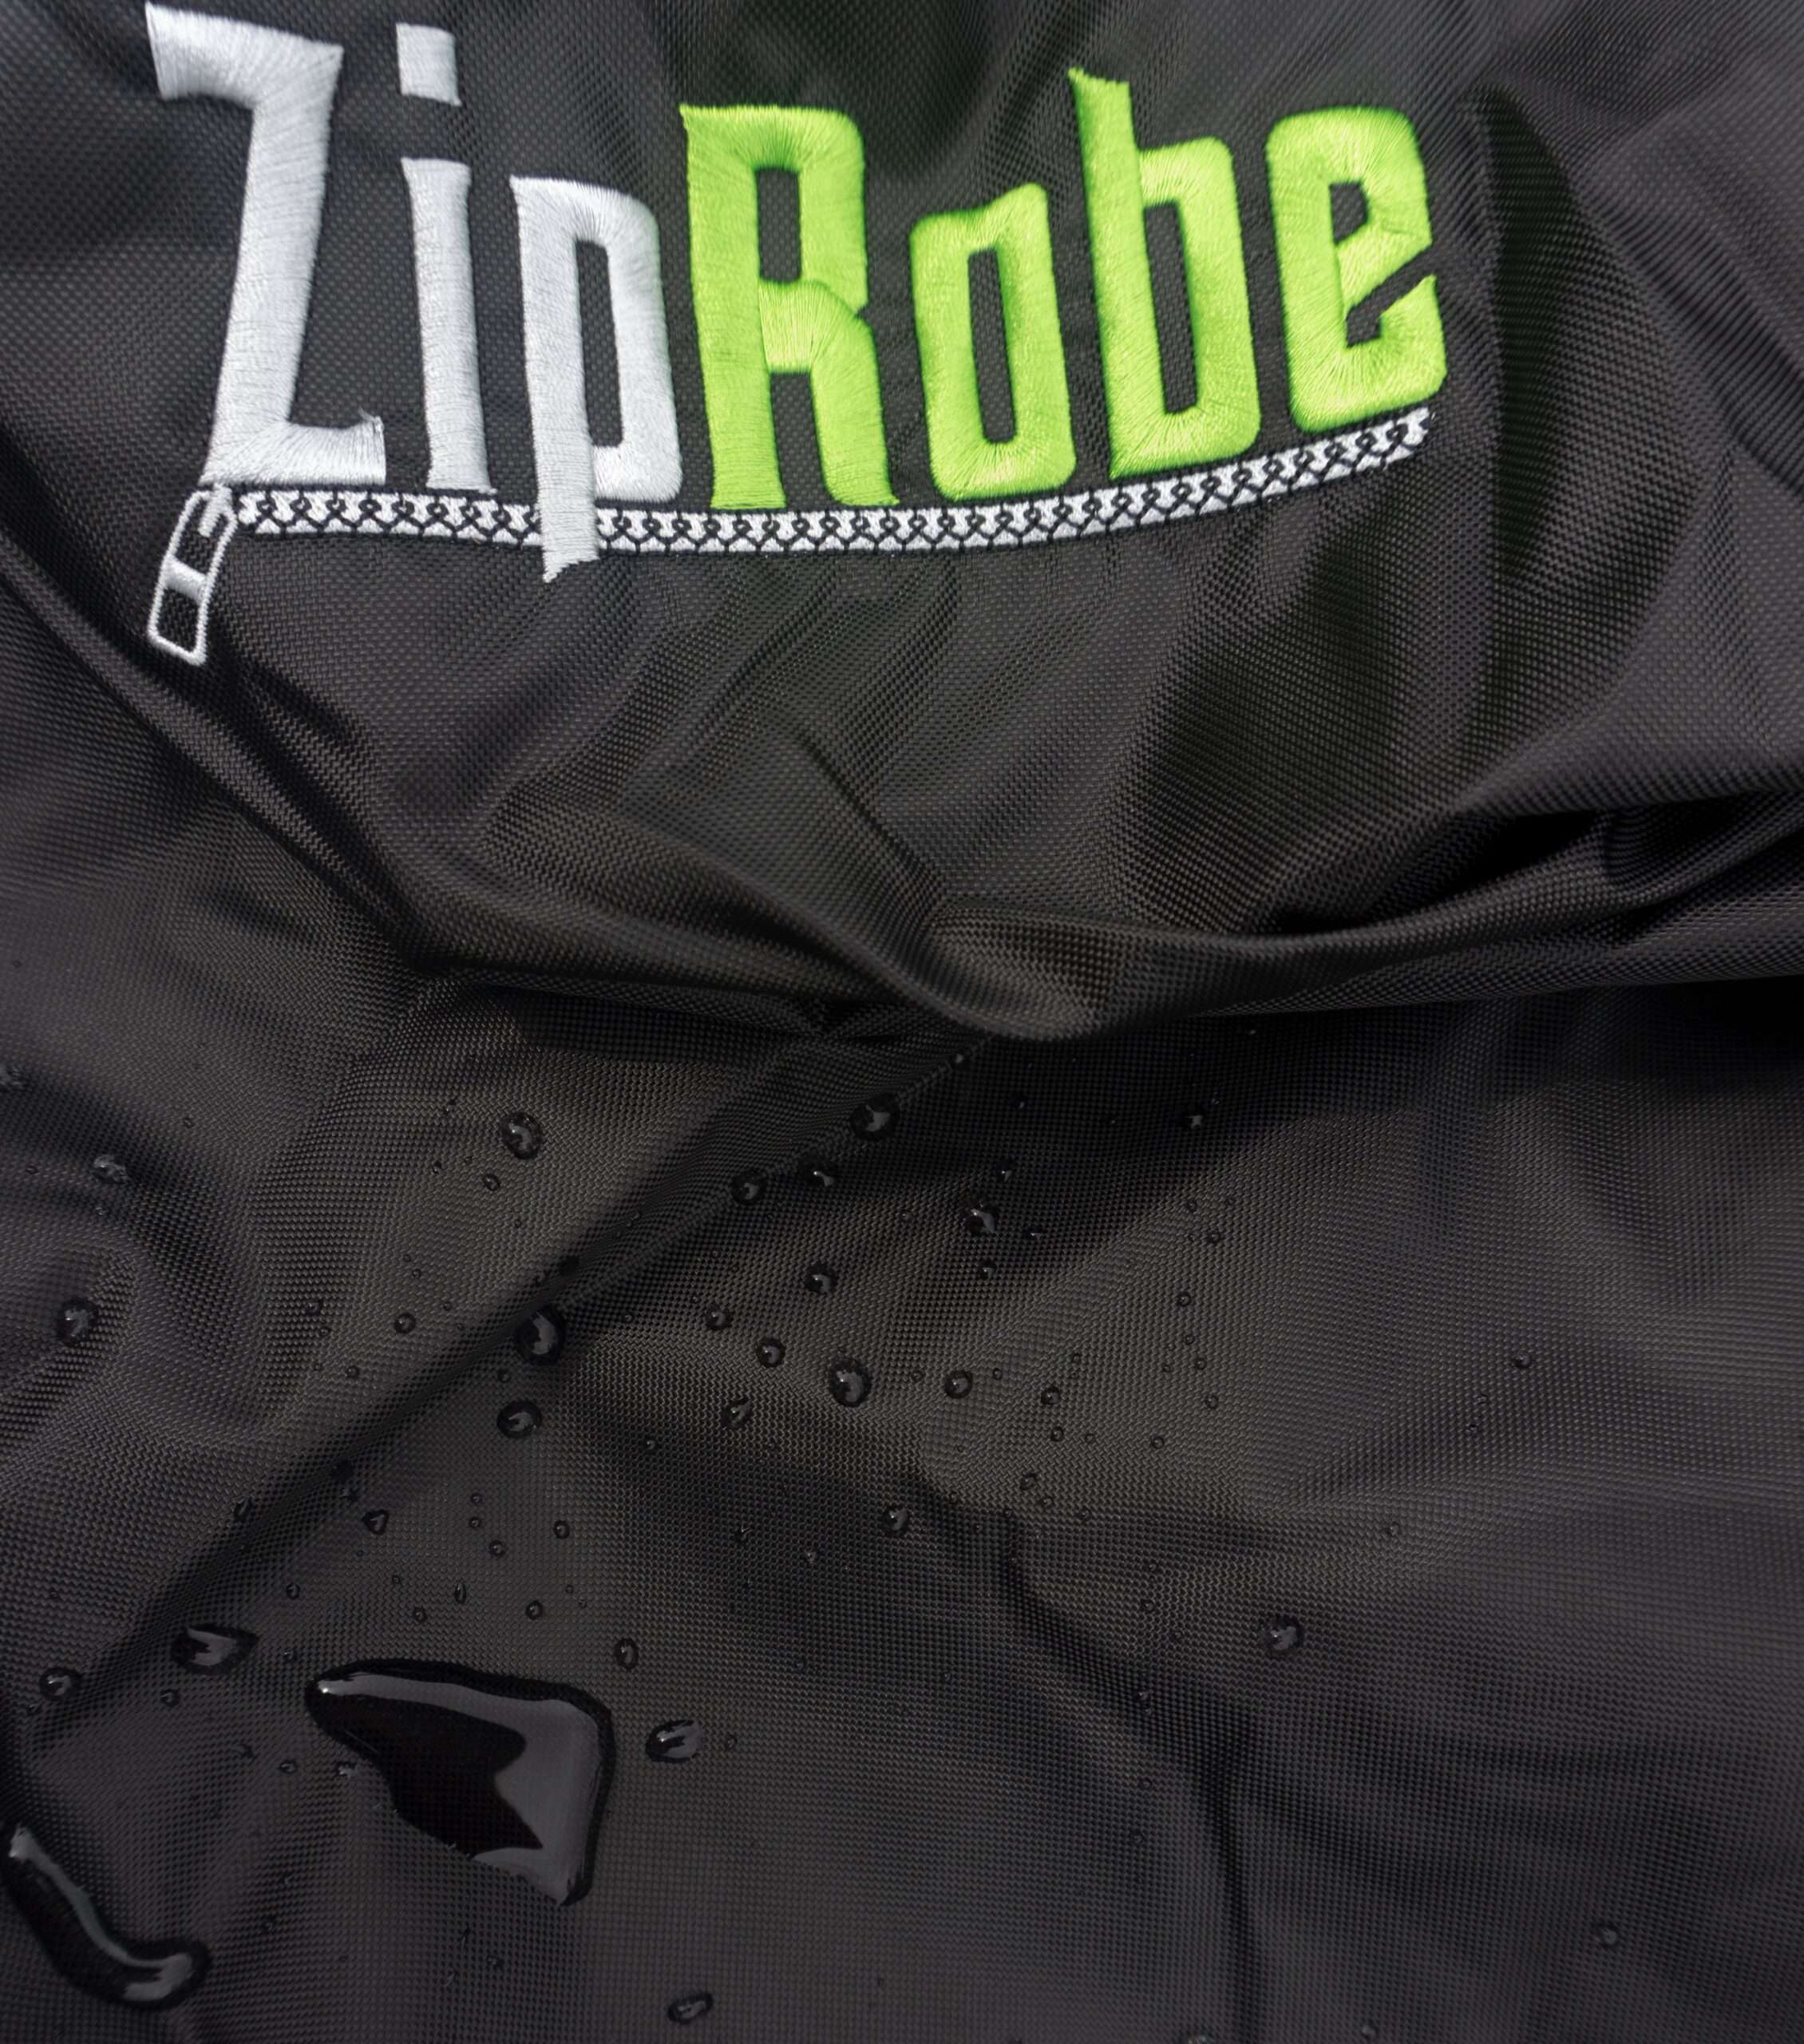 Waterproof Changing Robe designed in Ireland | ZipRobe